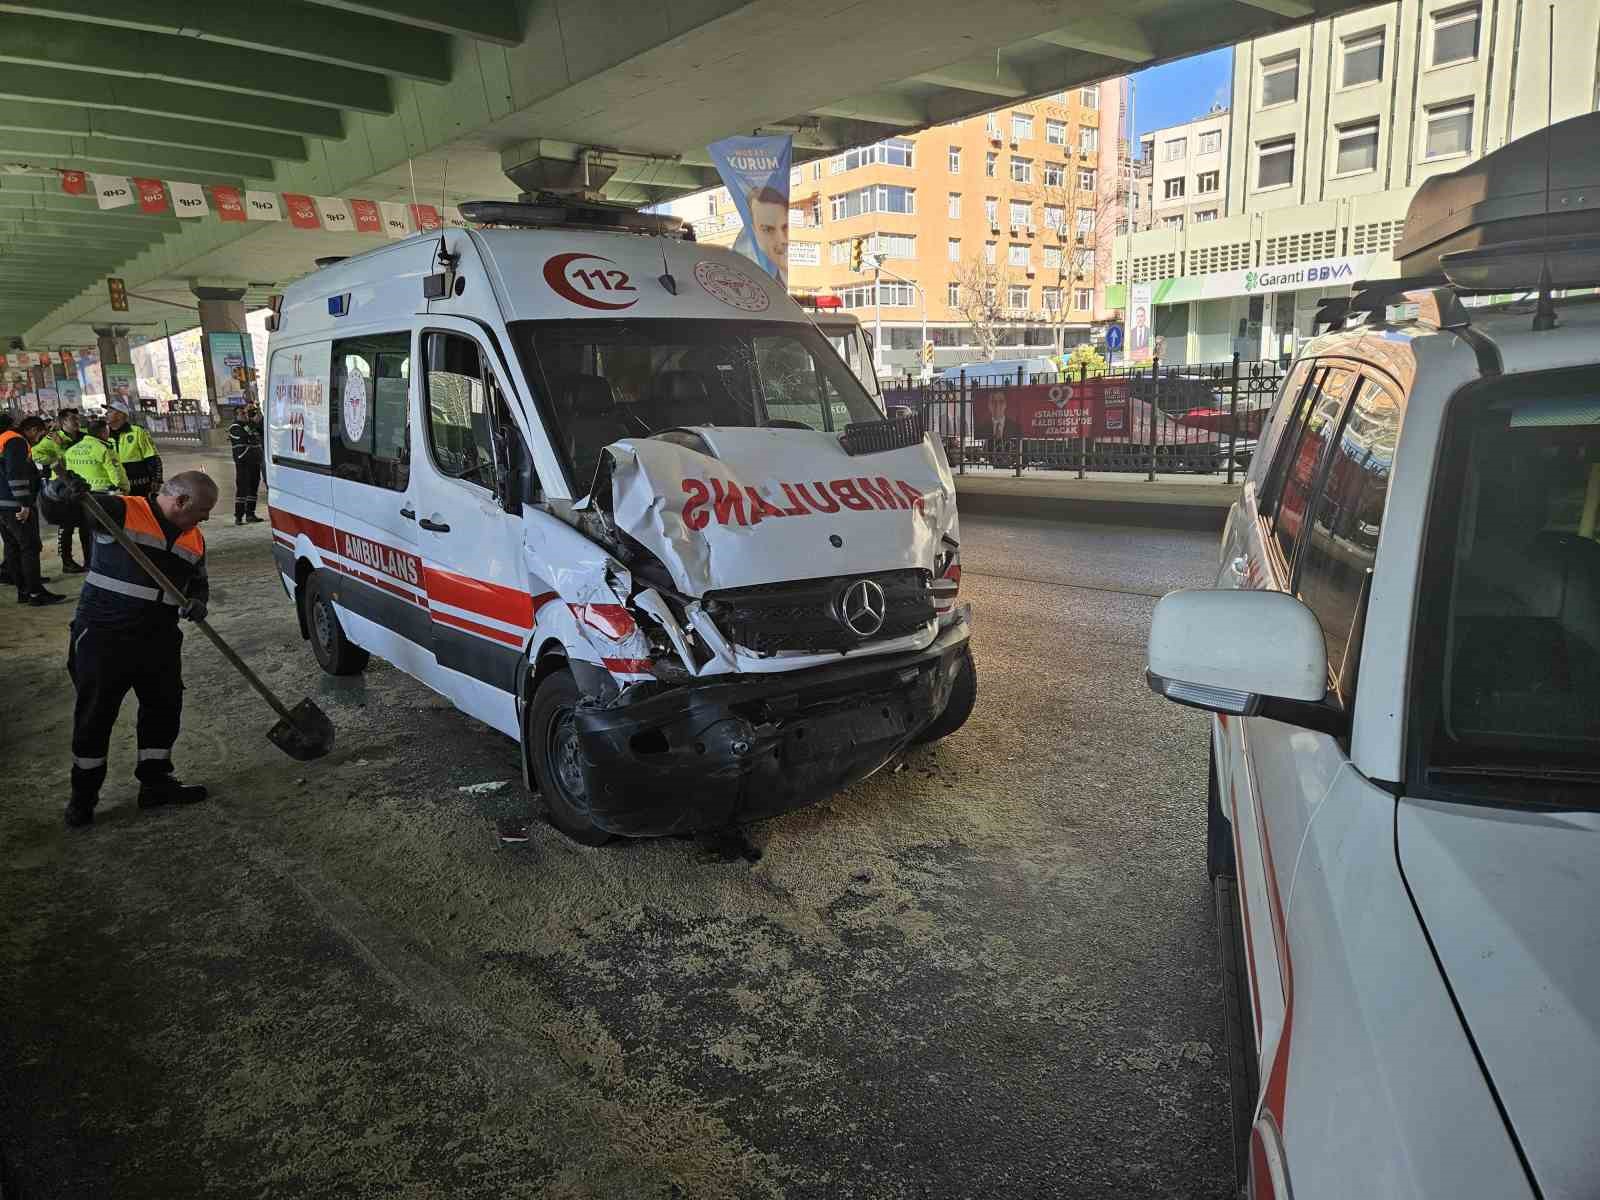 mecidiyekoyde hatali donus yapan minibusle hastaya yetismeye calisan ambulans carpisti 3